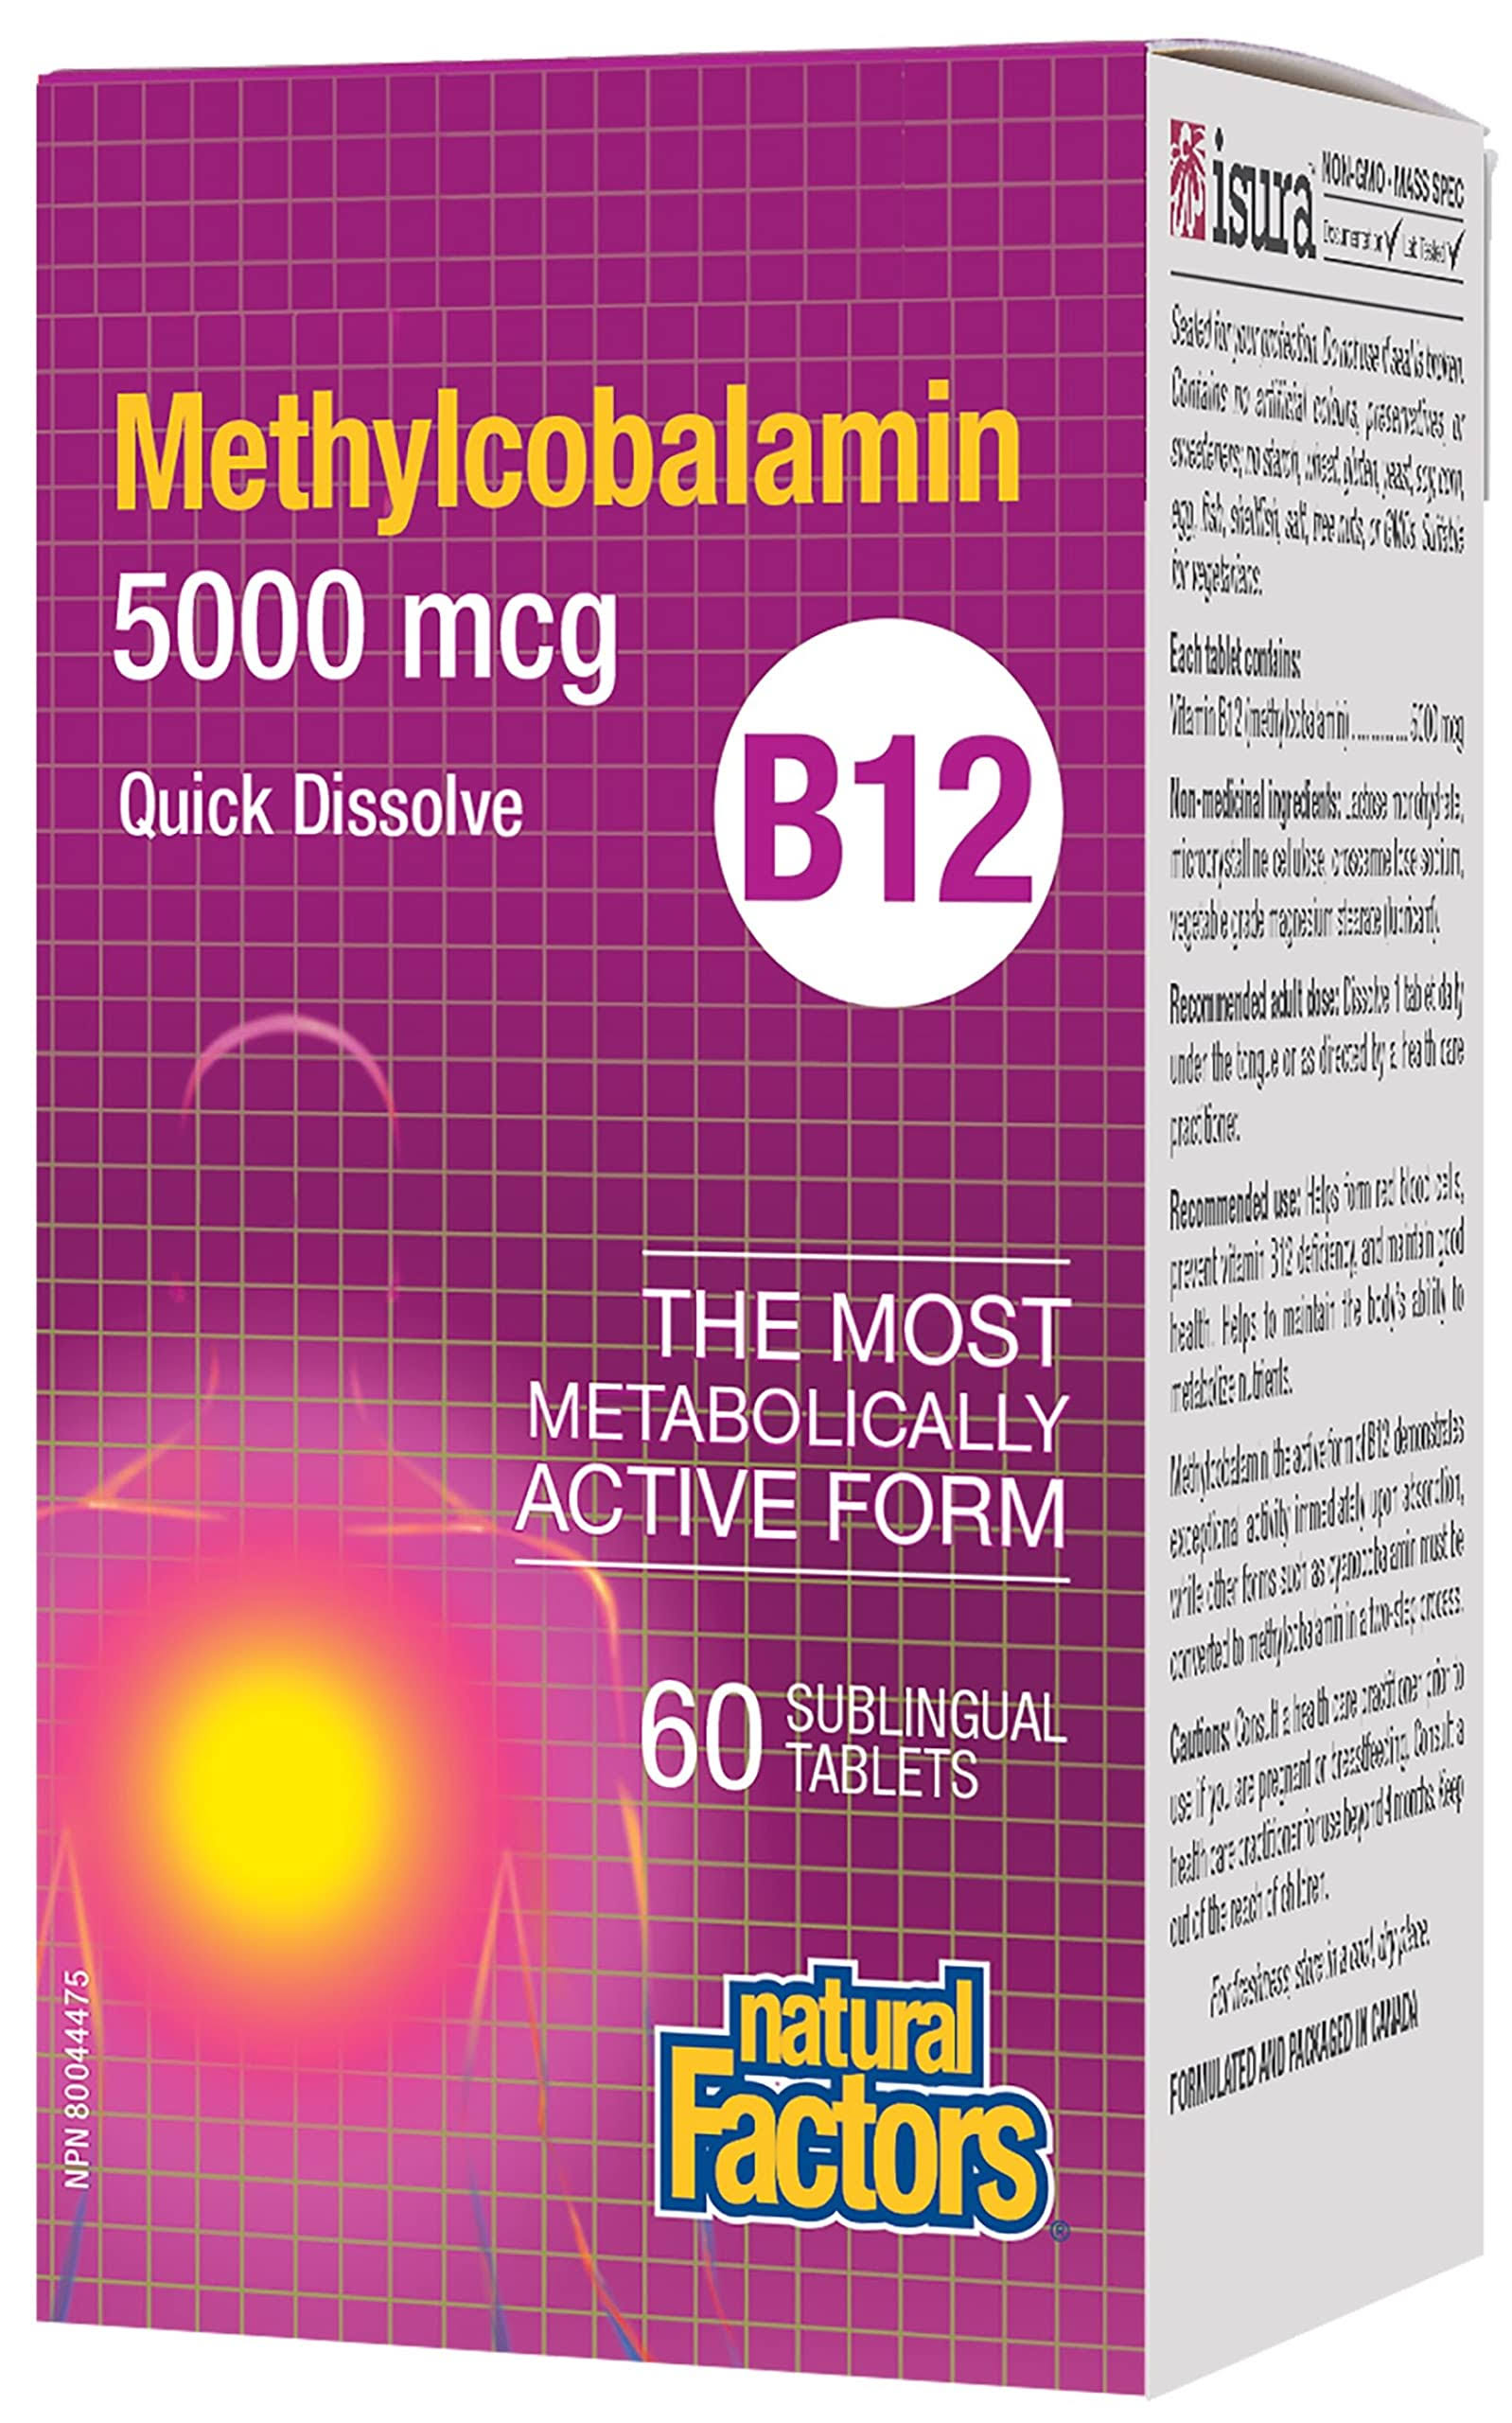 Natural Factors B12 Methylcobalamin - 5000 mcg, 60 Chewable Tablets